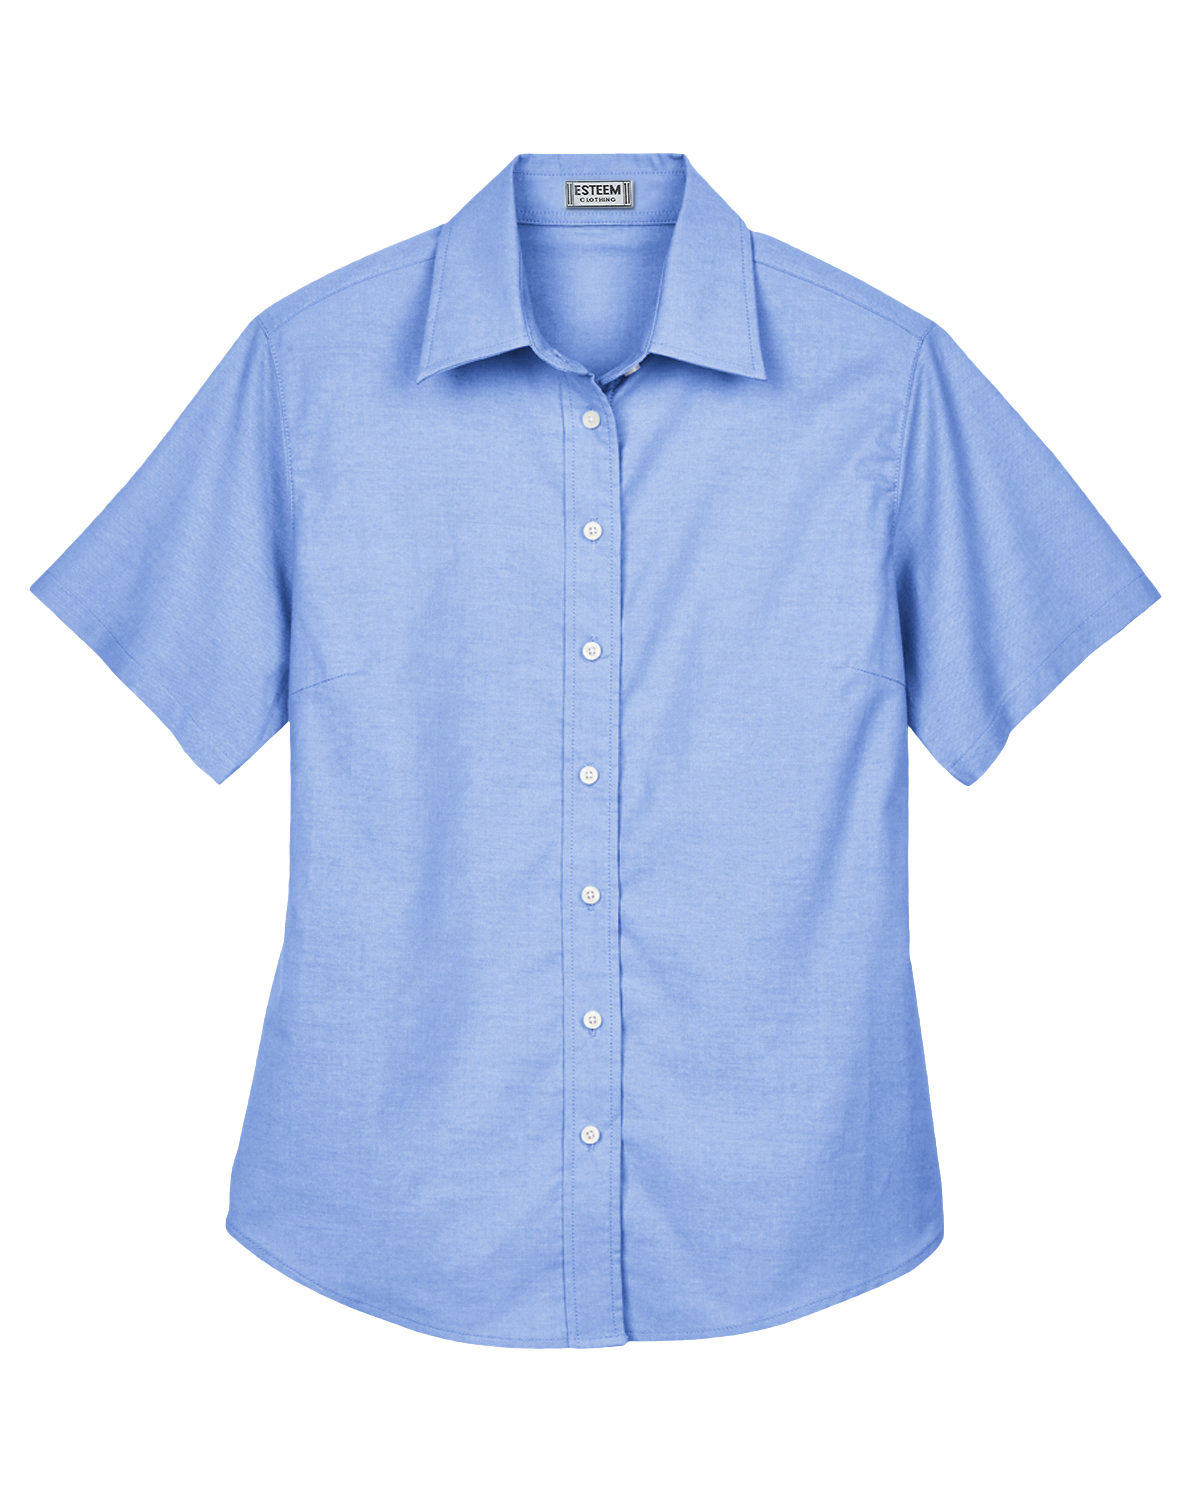 Ladies Short Sleeve Oxford shirt(Open collar) - Code 66444